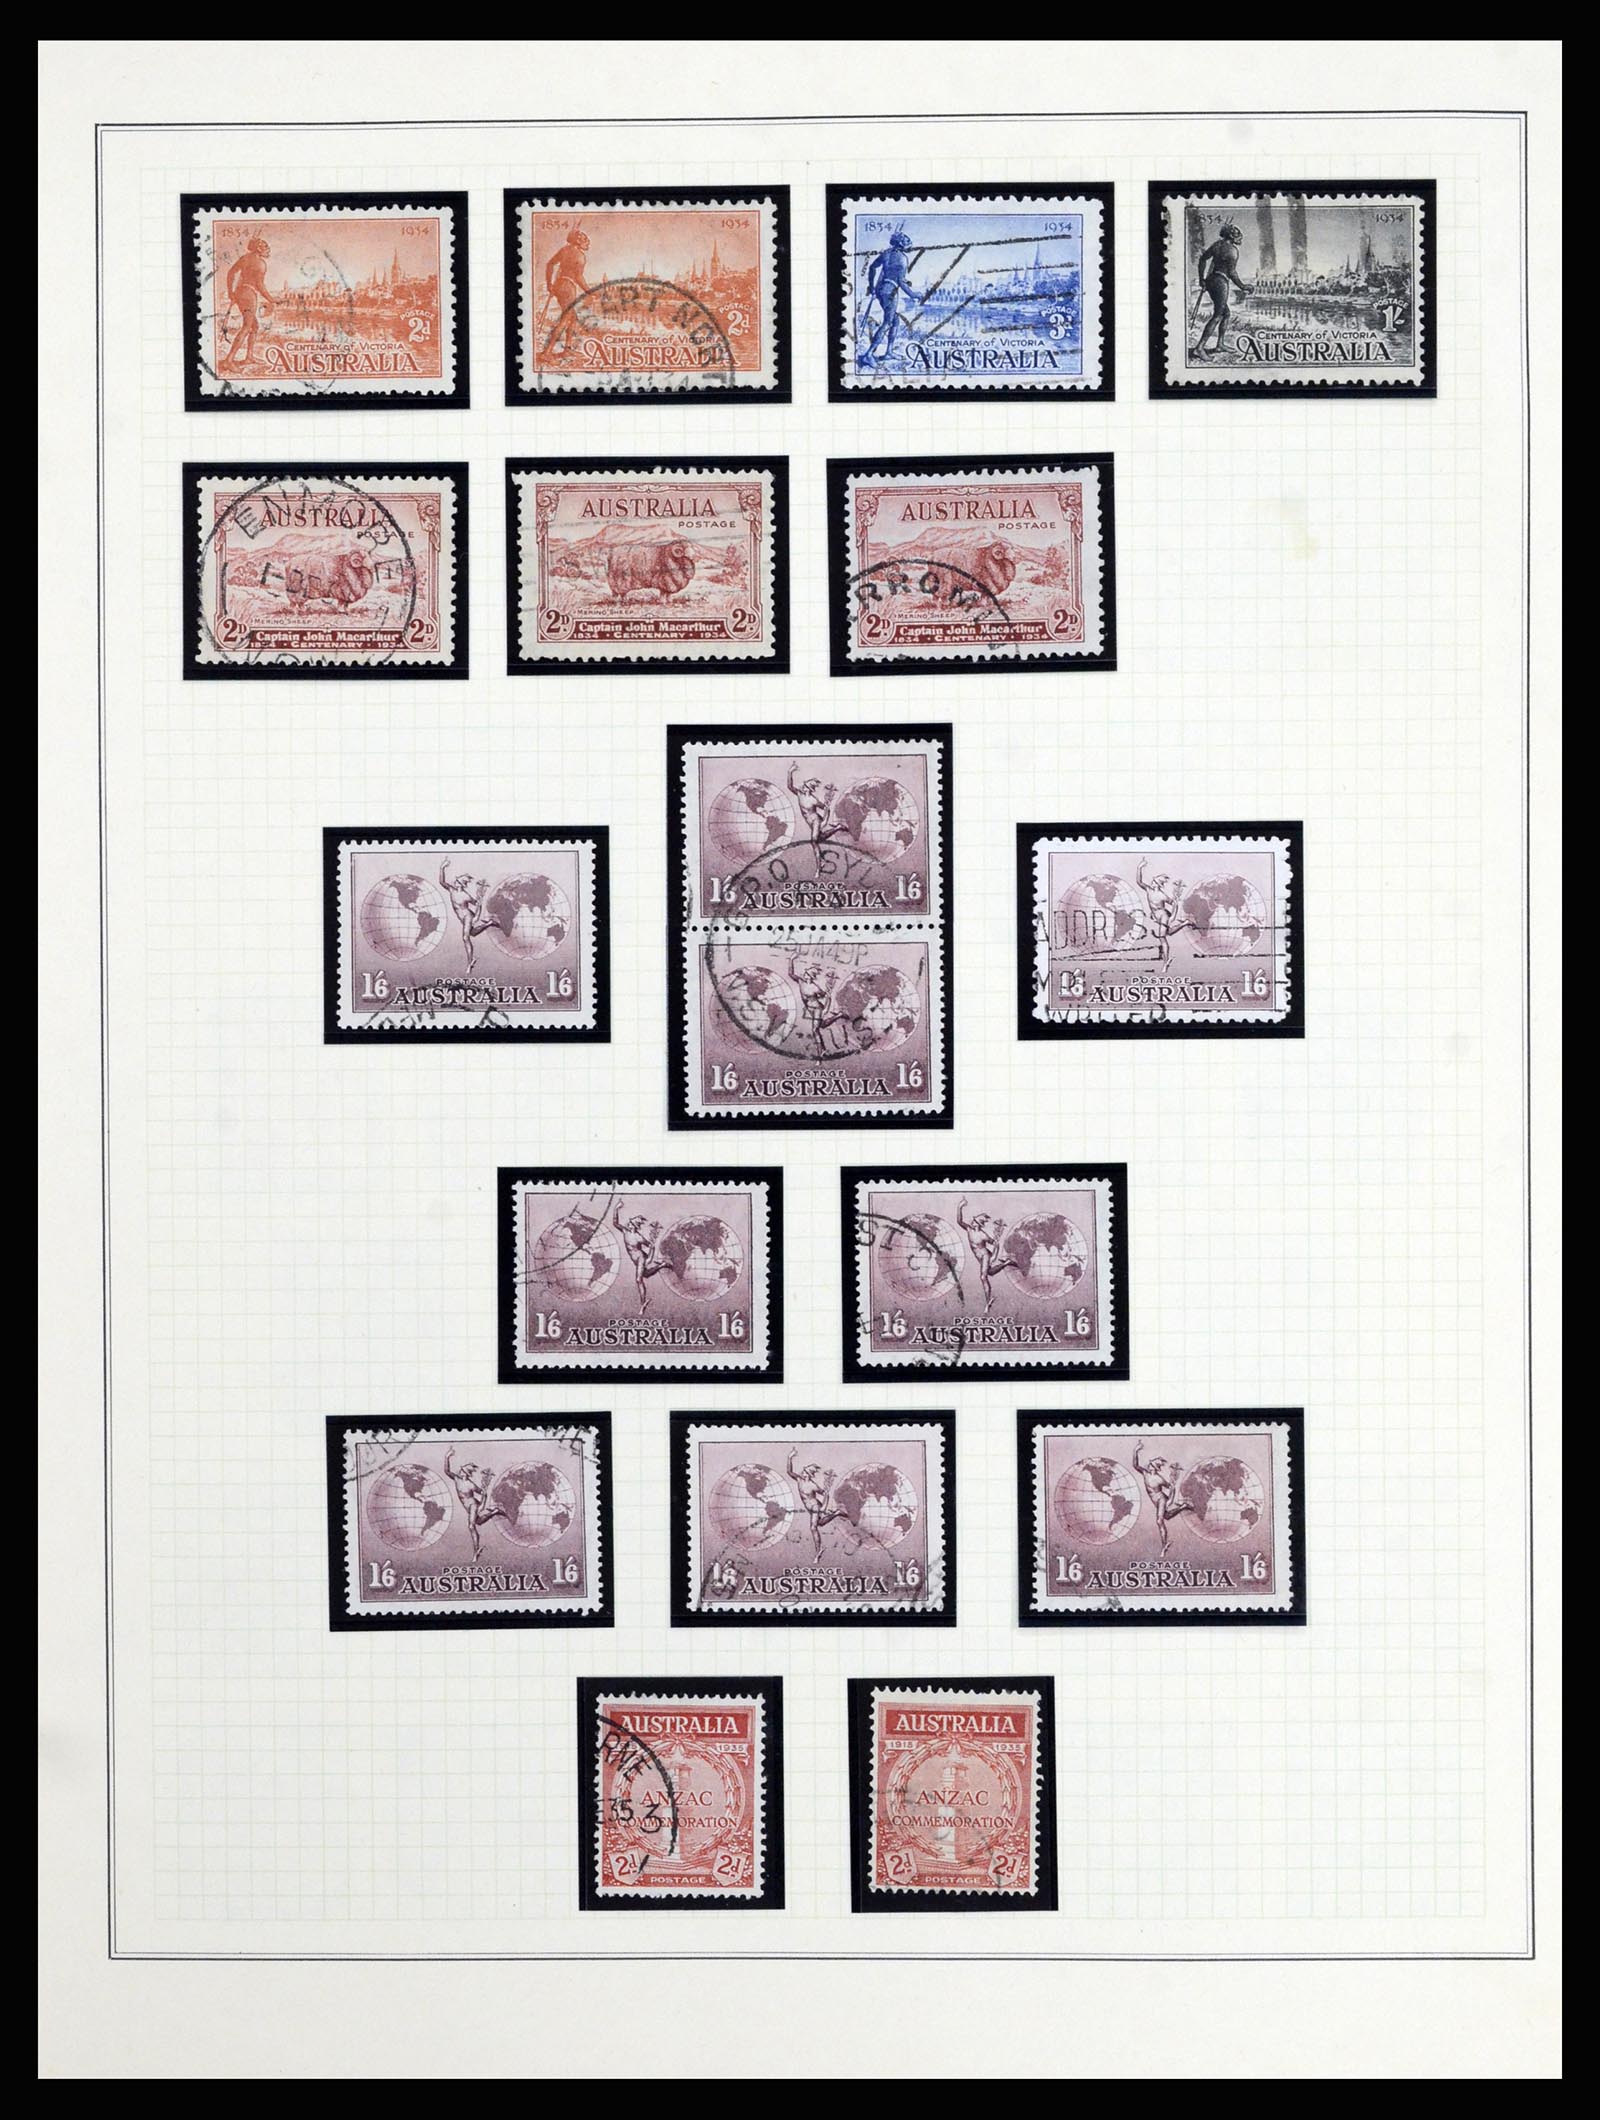 37049 005 - Stamp collection 37049 Australia 1913-1990.